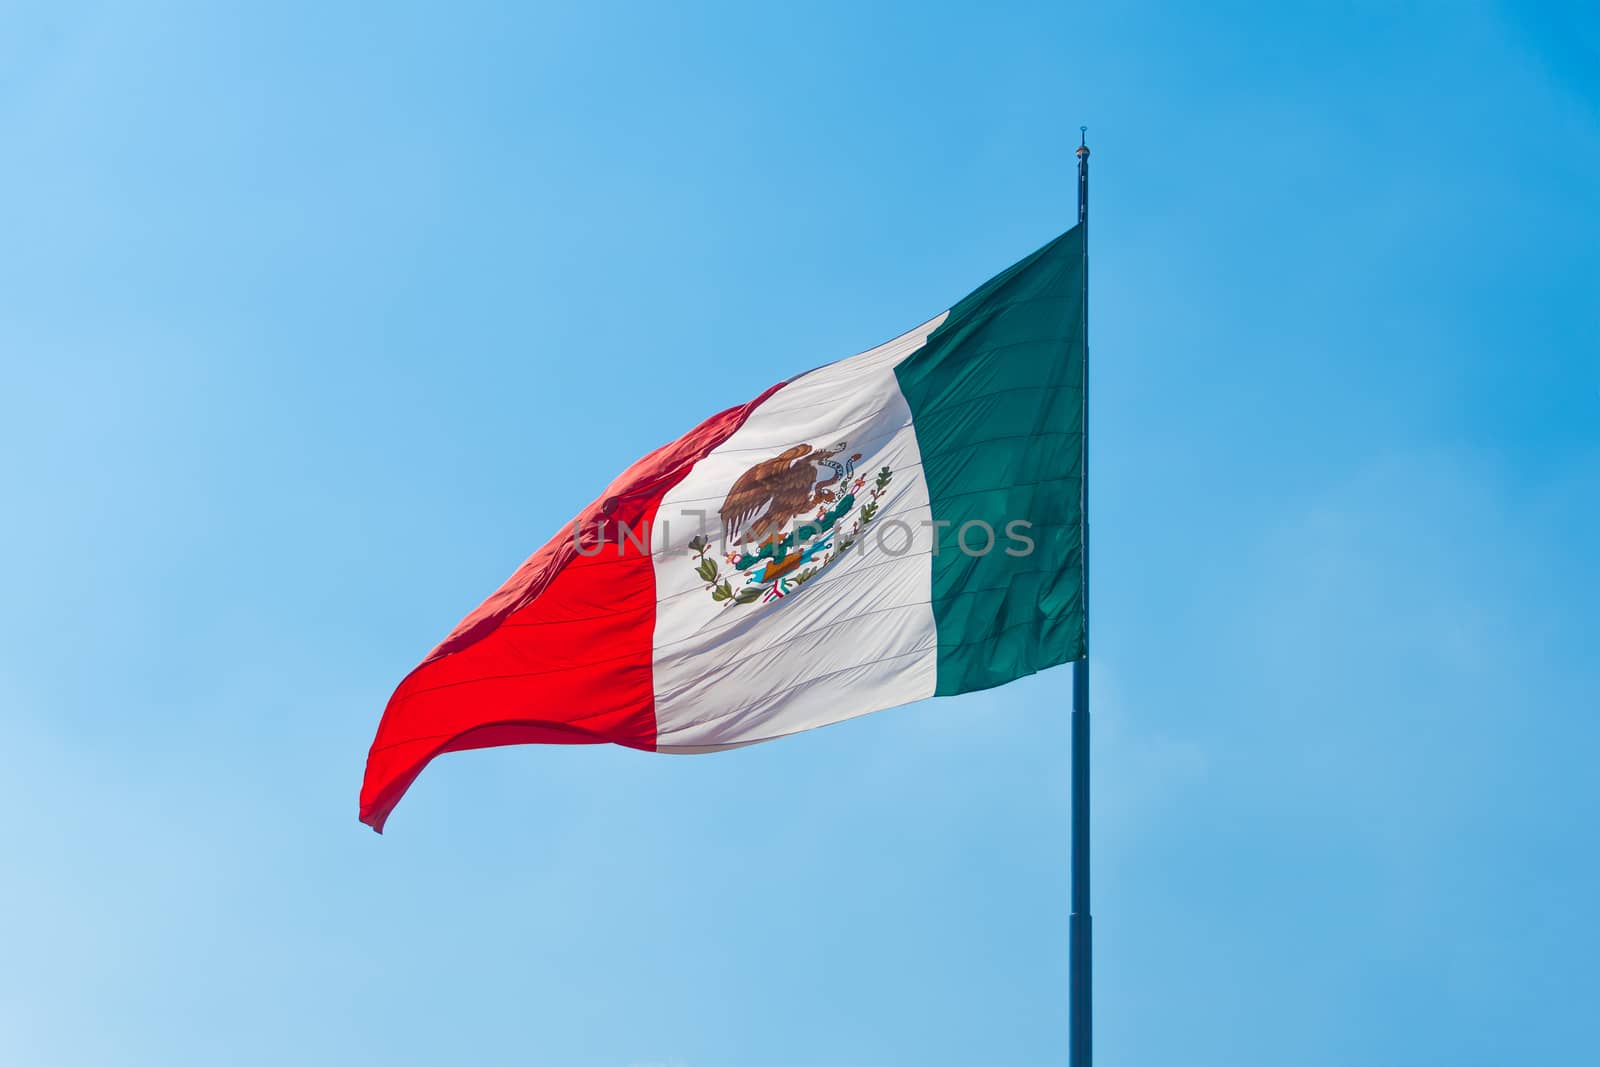 Flag of Mexico by whitechild